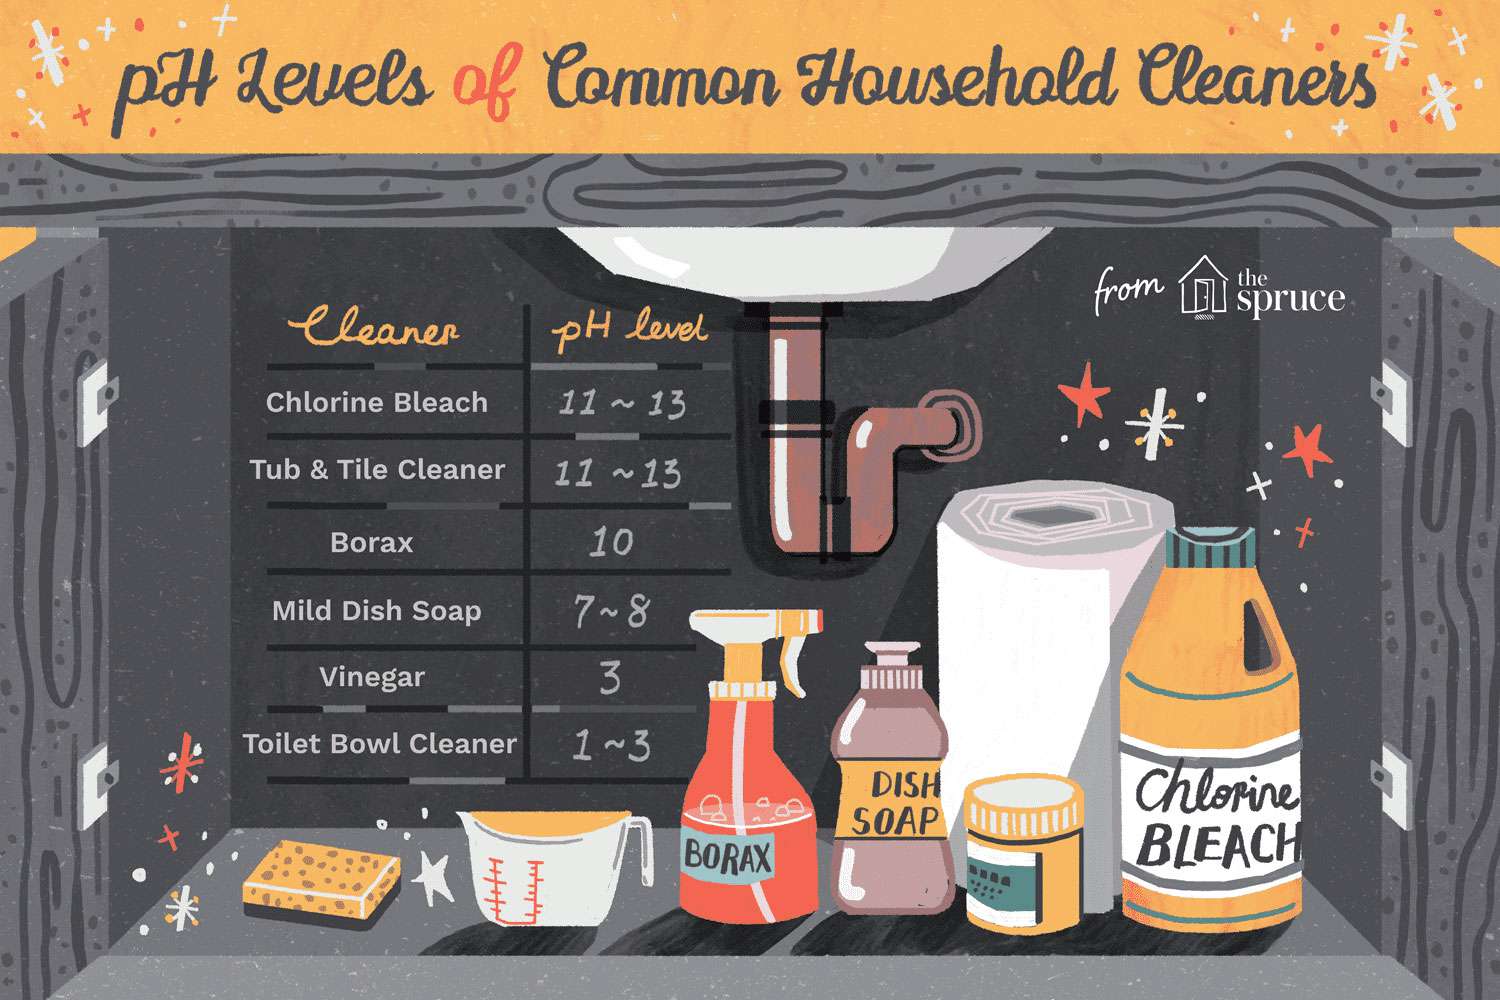 níveis de ph de produtos de limpeza domésticos comuns